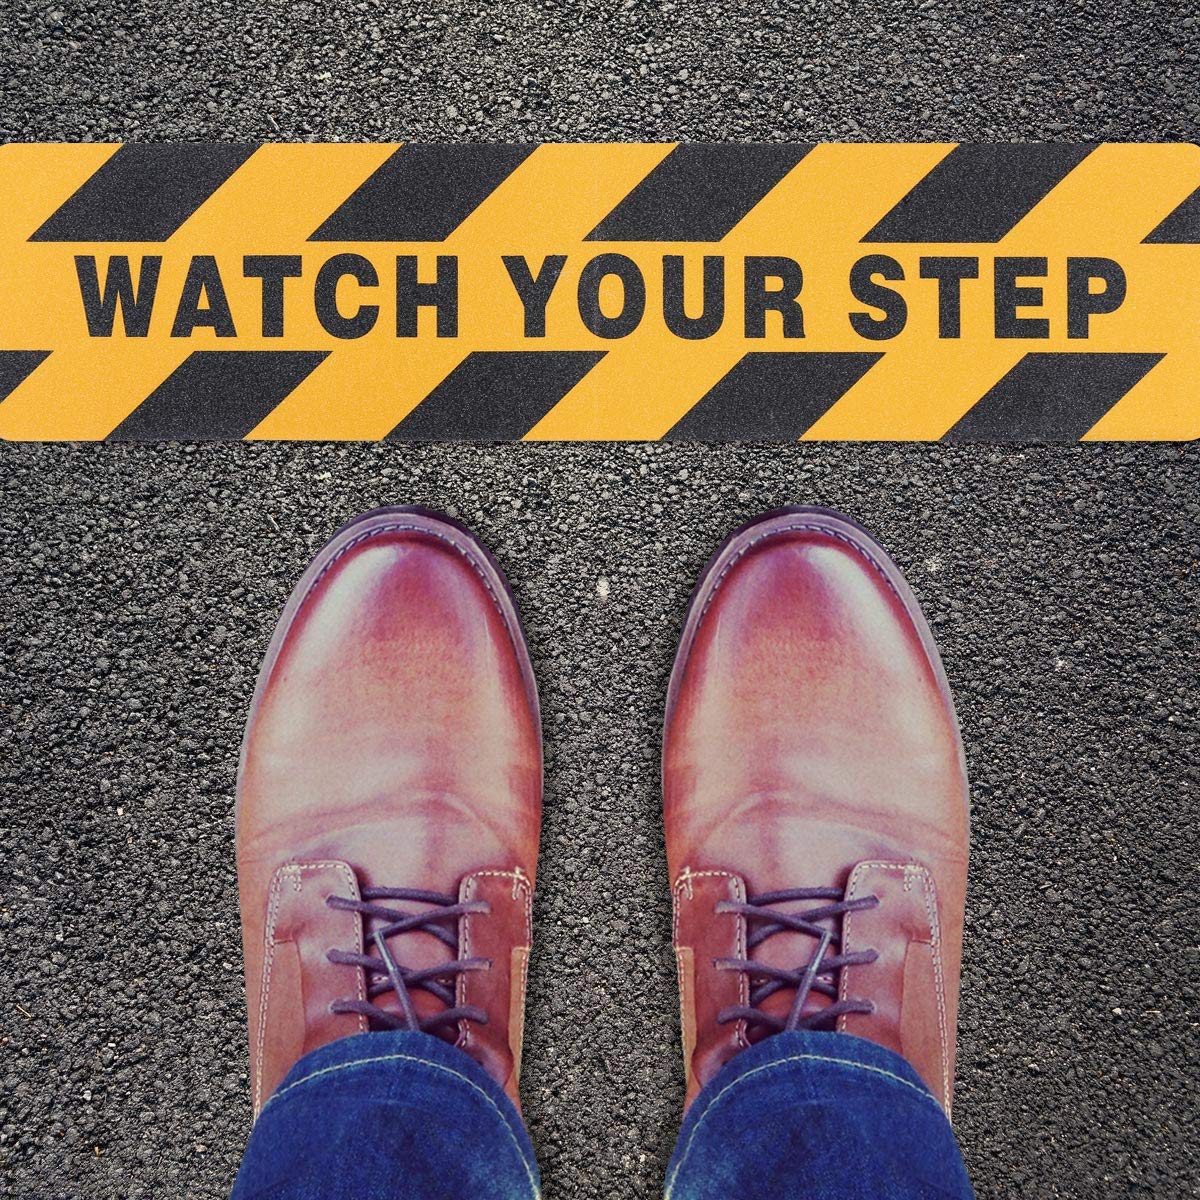 Self Adhesive Anti Slip/Anti Skid Strip. "WATCH YOUR STEPS" message LifeKrafts